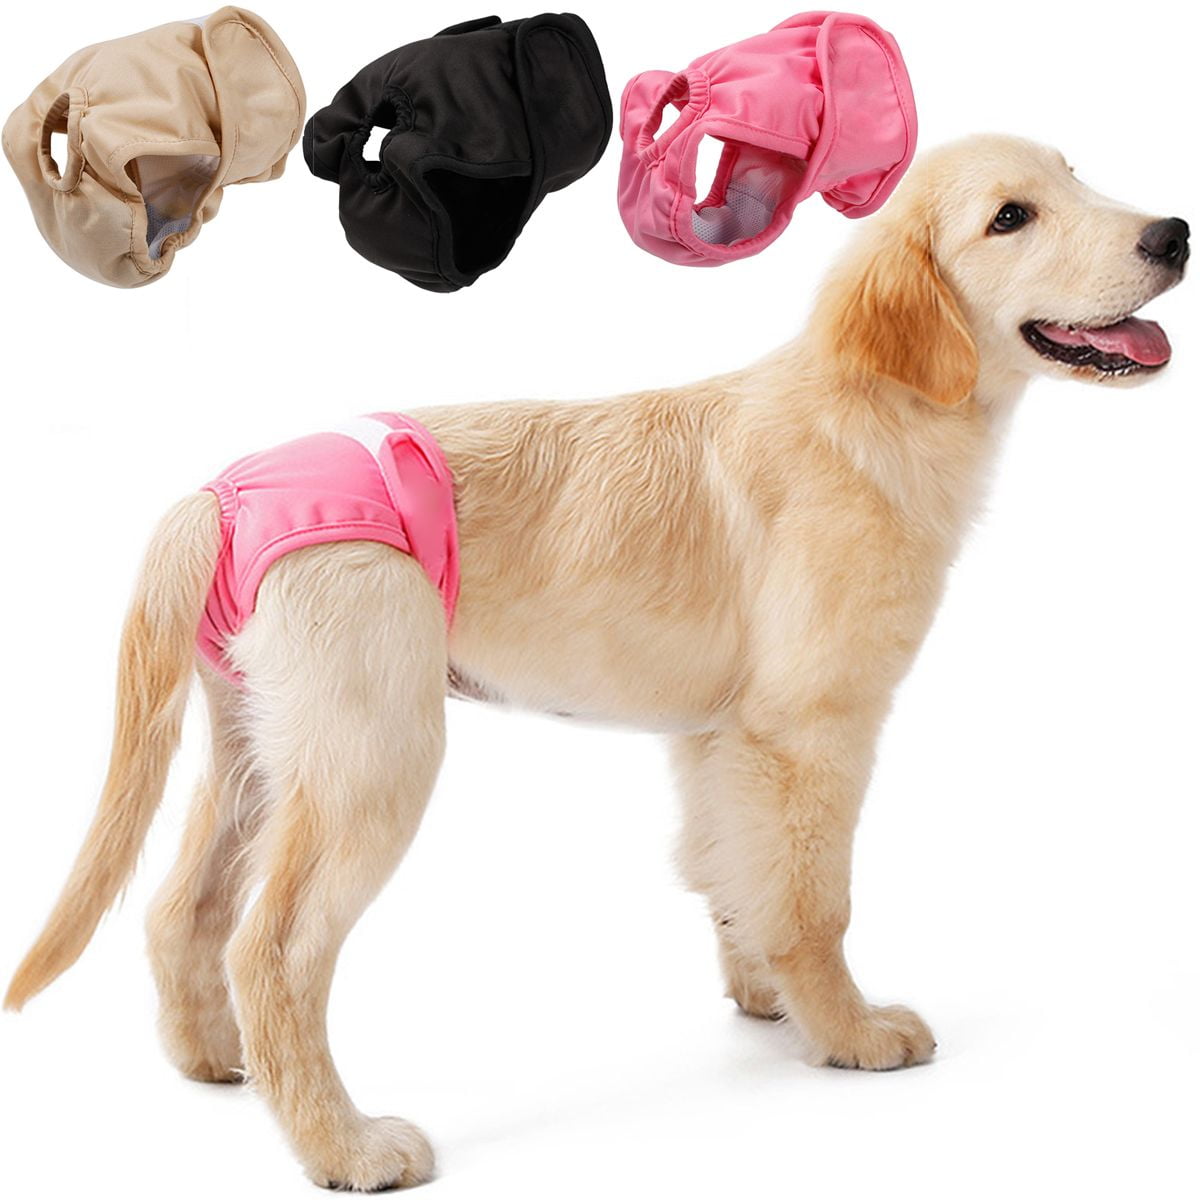 1 Reusable Washable Dog Diaper Nappy Durable Doggie Puppy Pets Pants 4 Sizes 